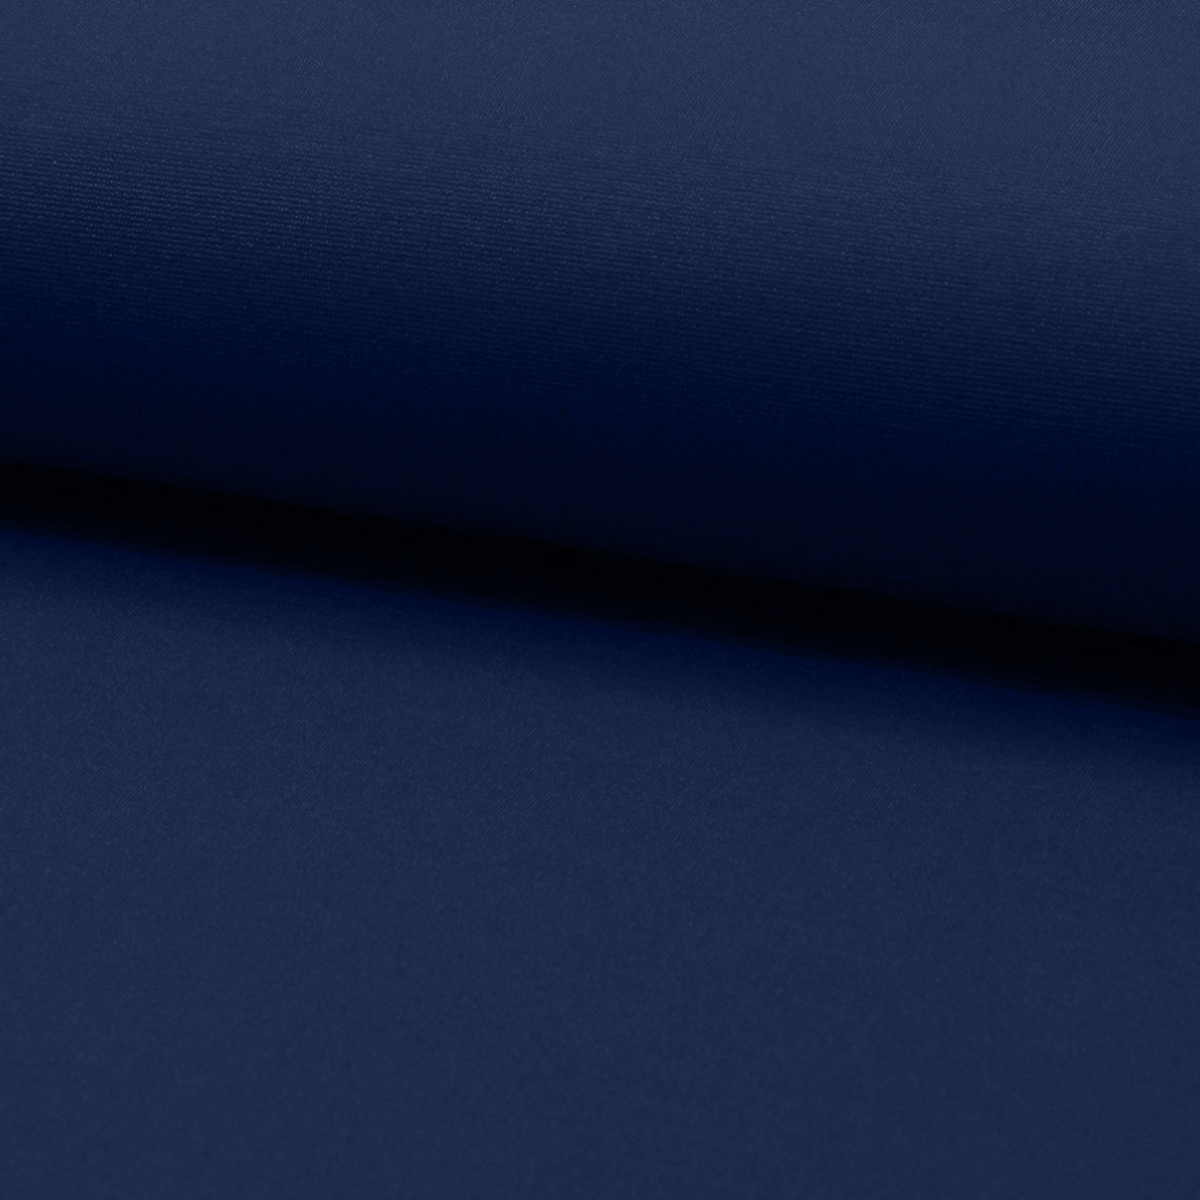 Romanitjersey lapislazuli-blau, 60%Viscose, 35%Nylon, 5%Elasthan/Spandex, ca.150cm breit